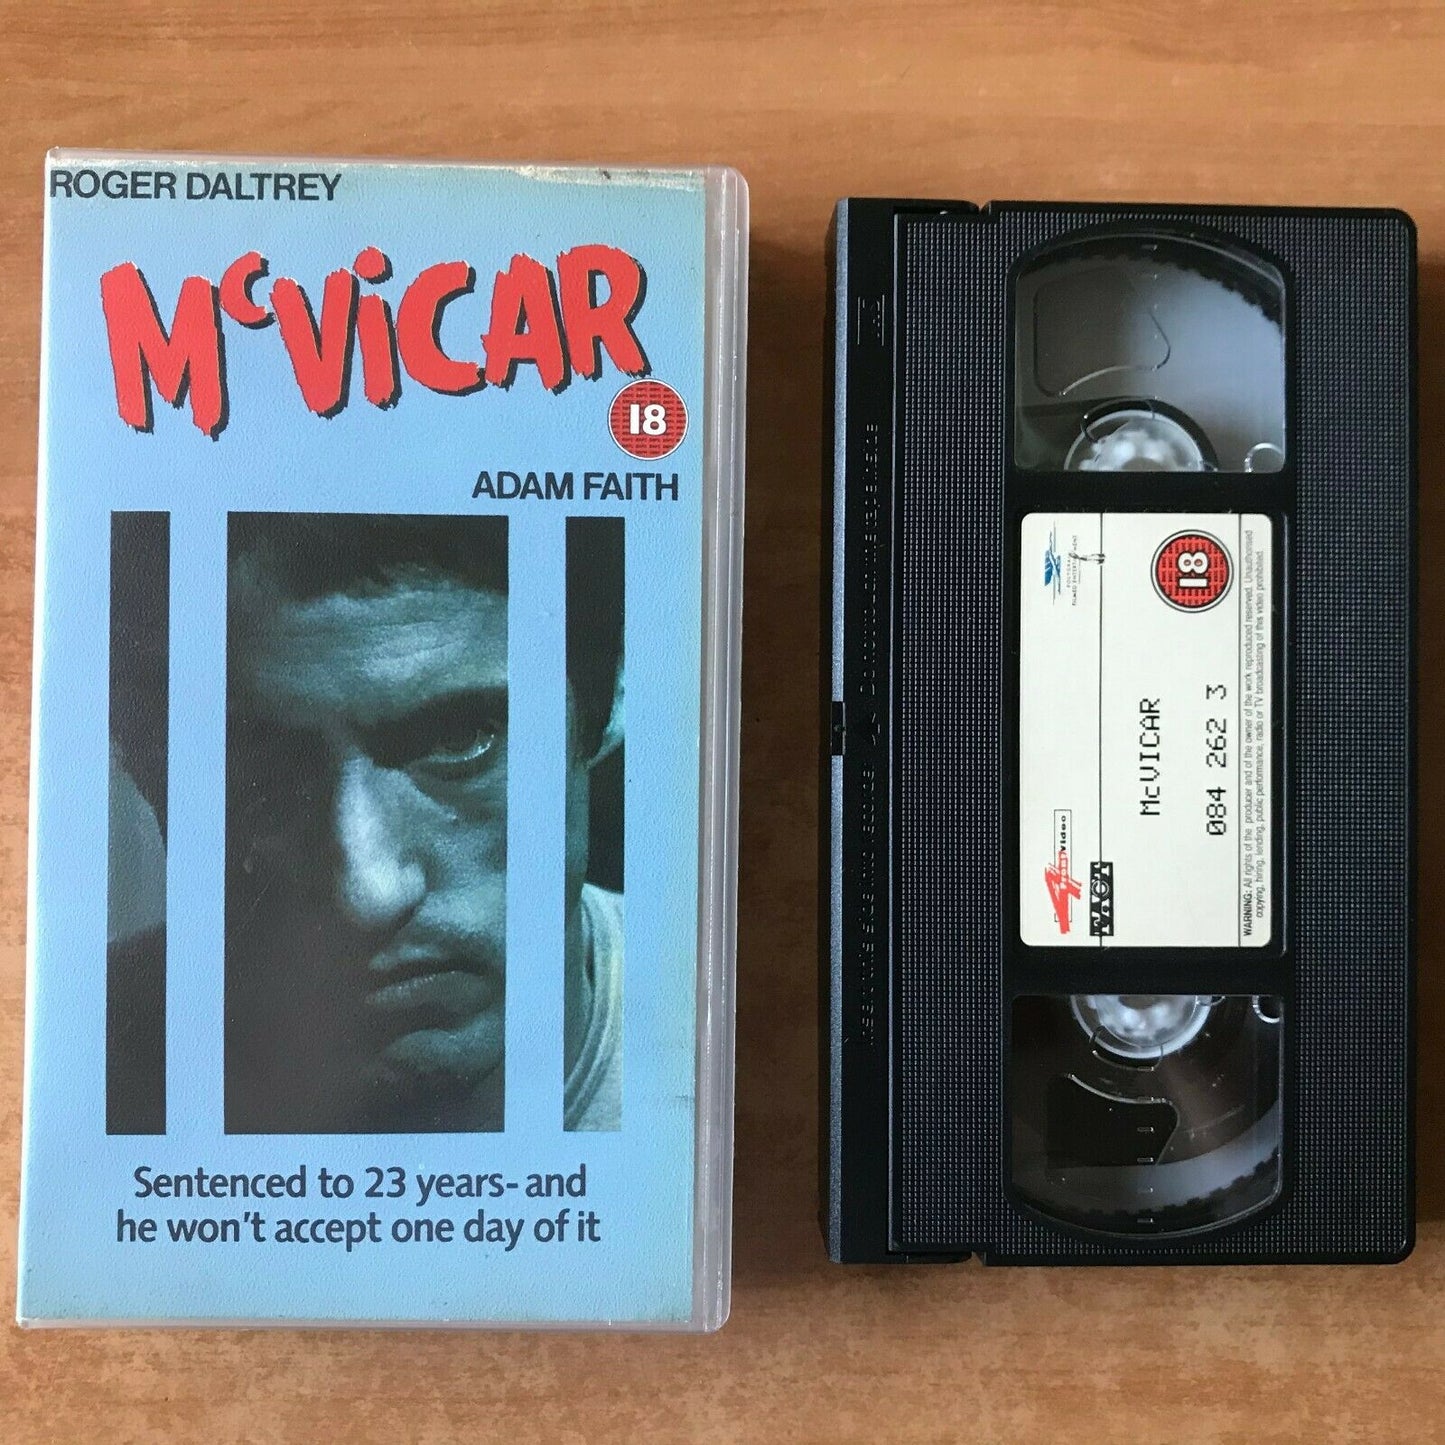 McVicar (1980): Crime Drama [True Story] London Bad Boy - Roger Daltrey - VHS-